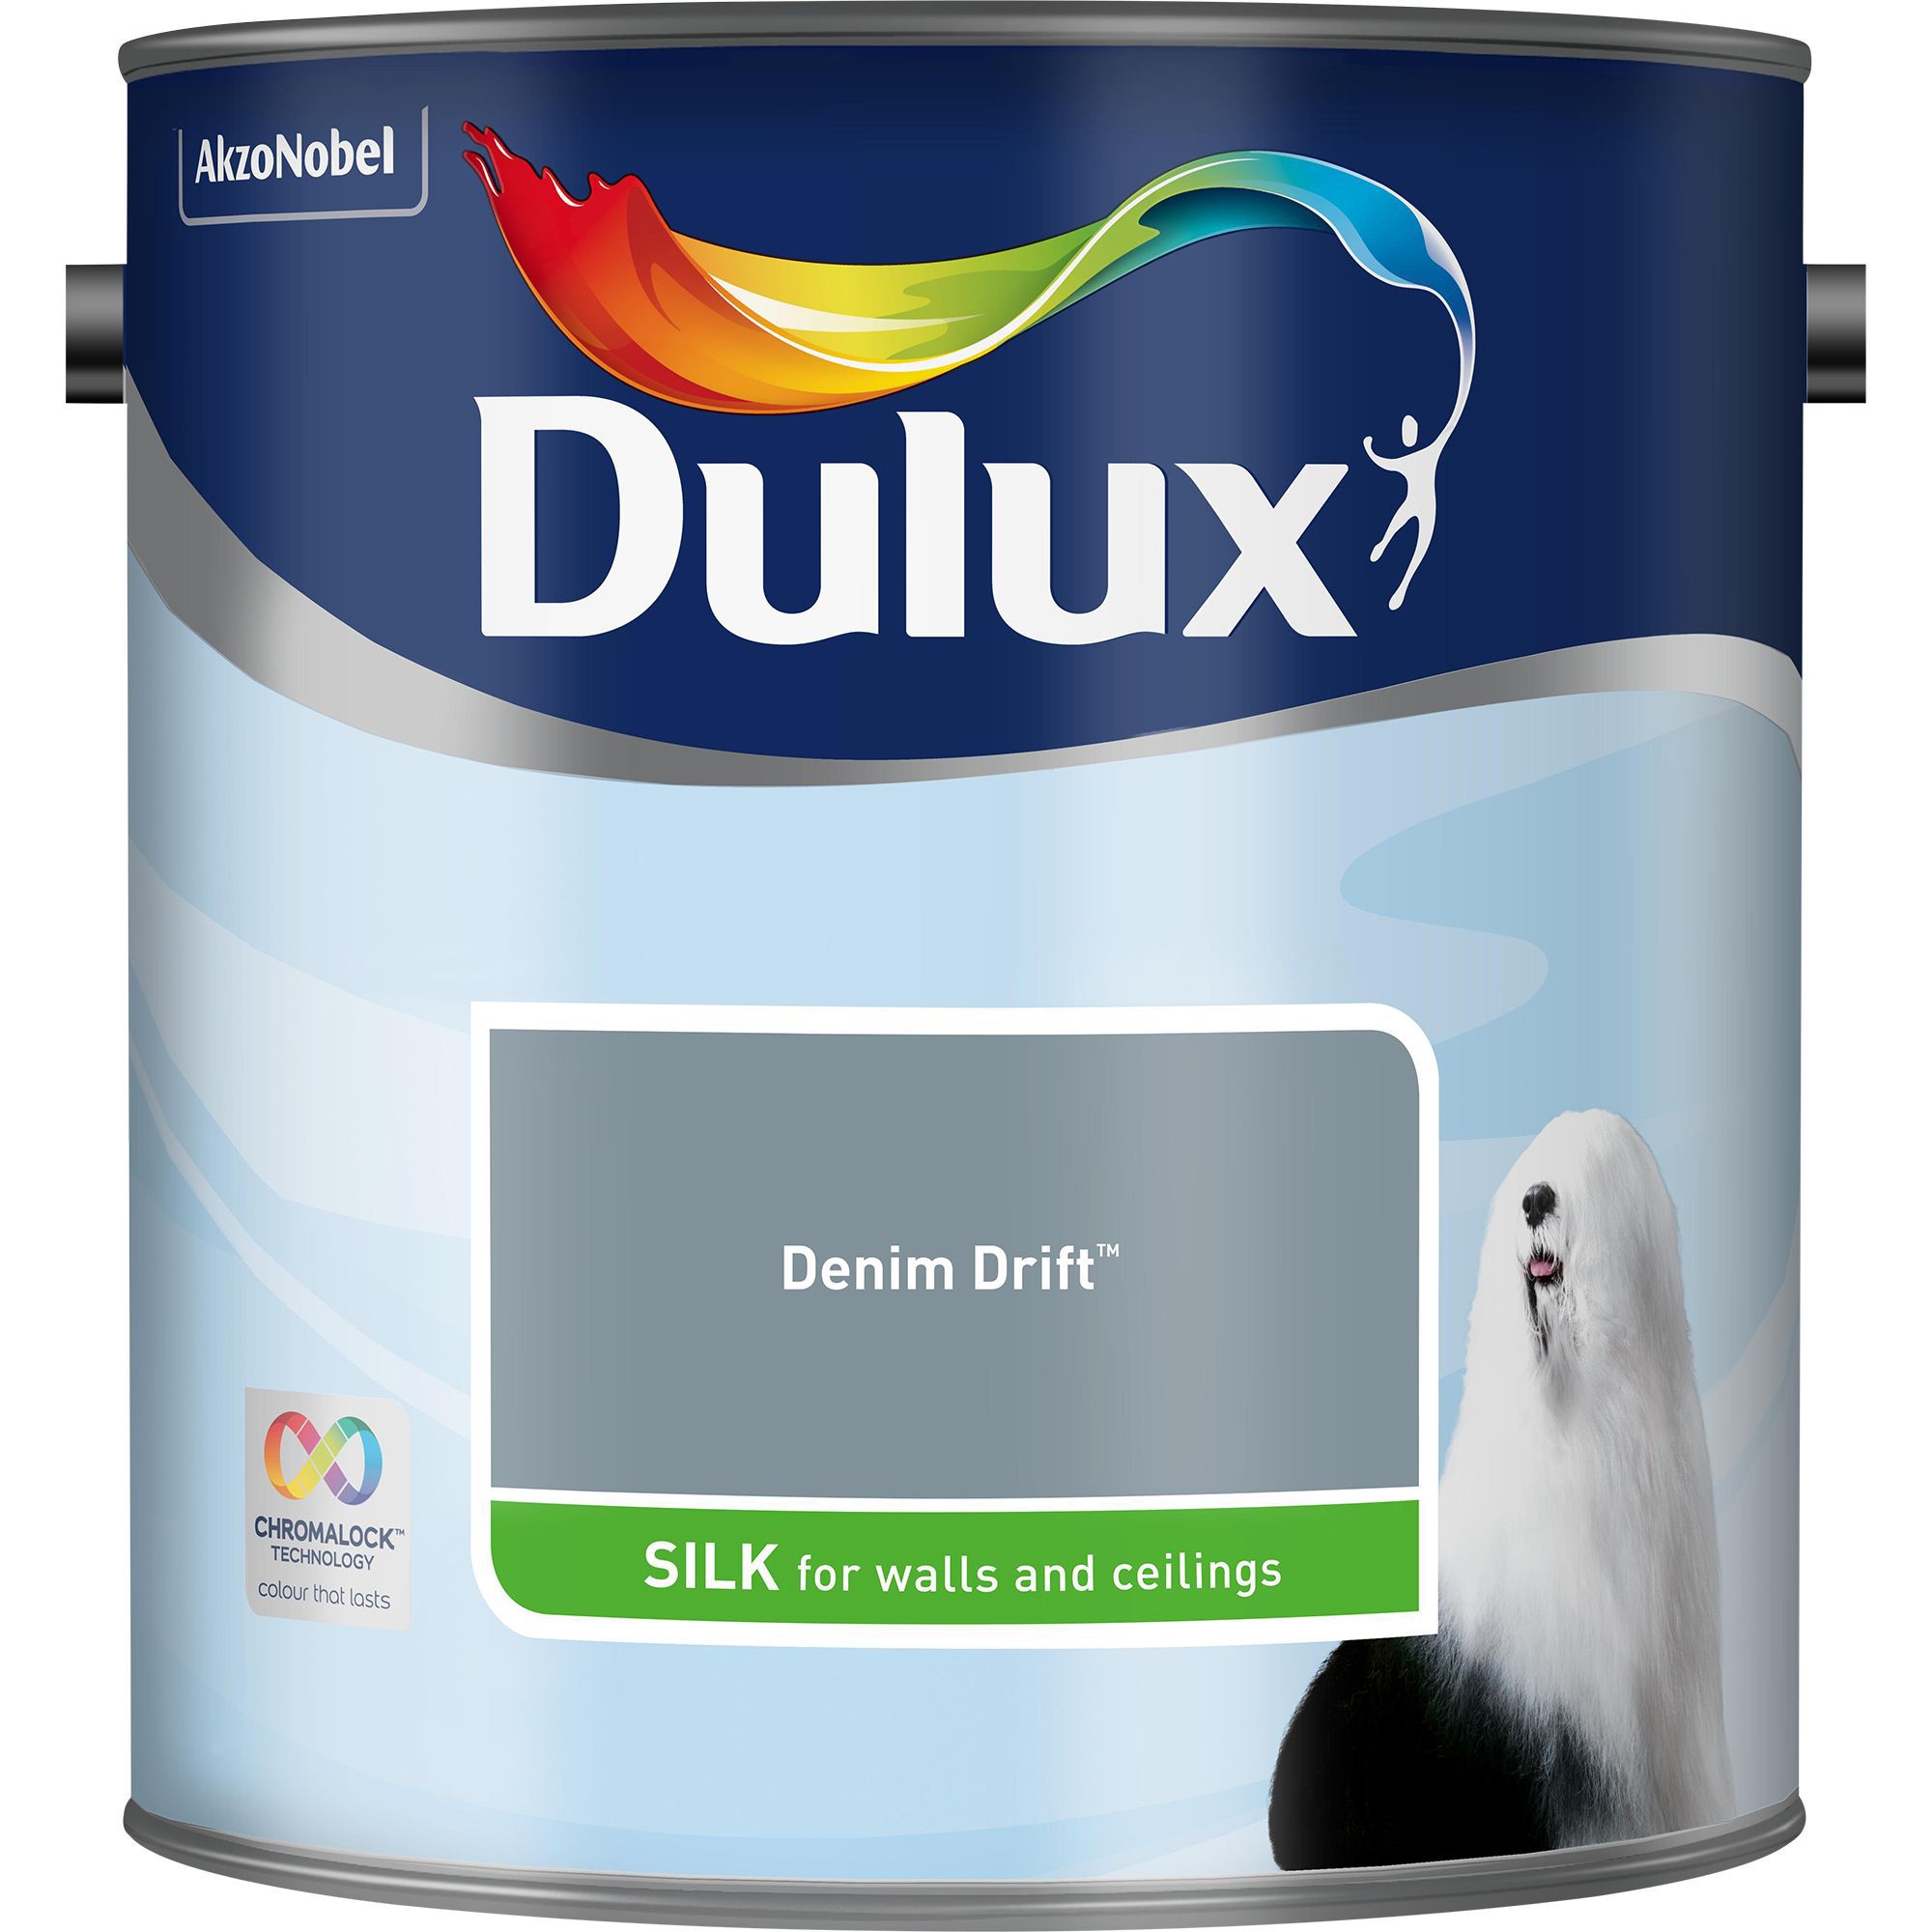 Dulux Denim Drift Silk Emulsion Paint 2 5l Departments Diy At B Q